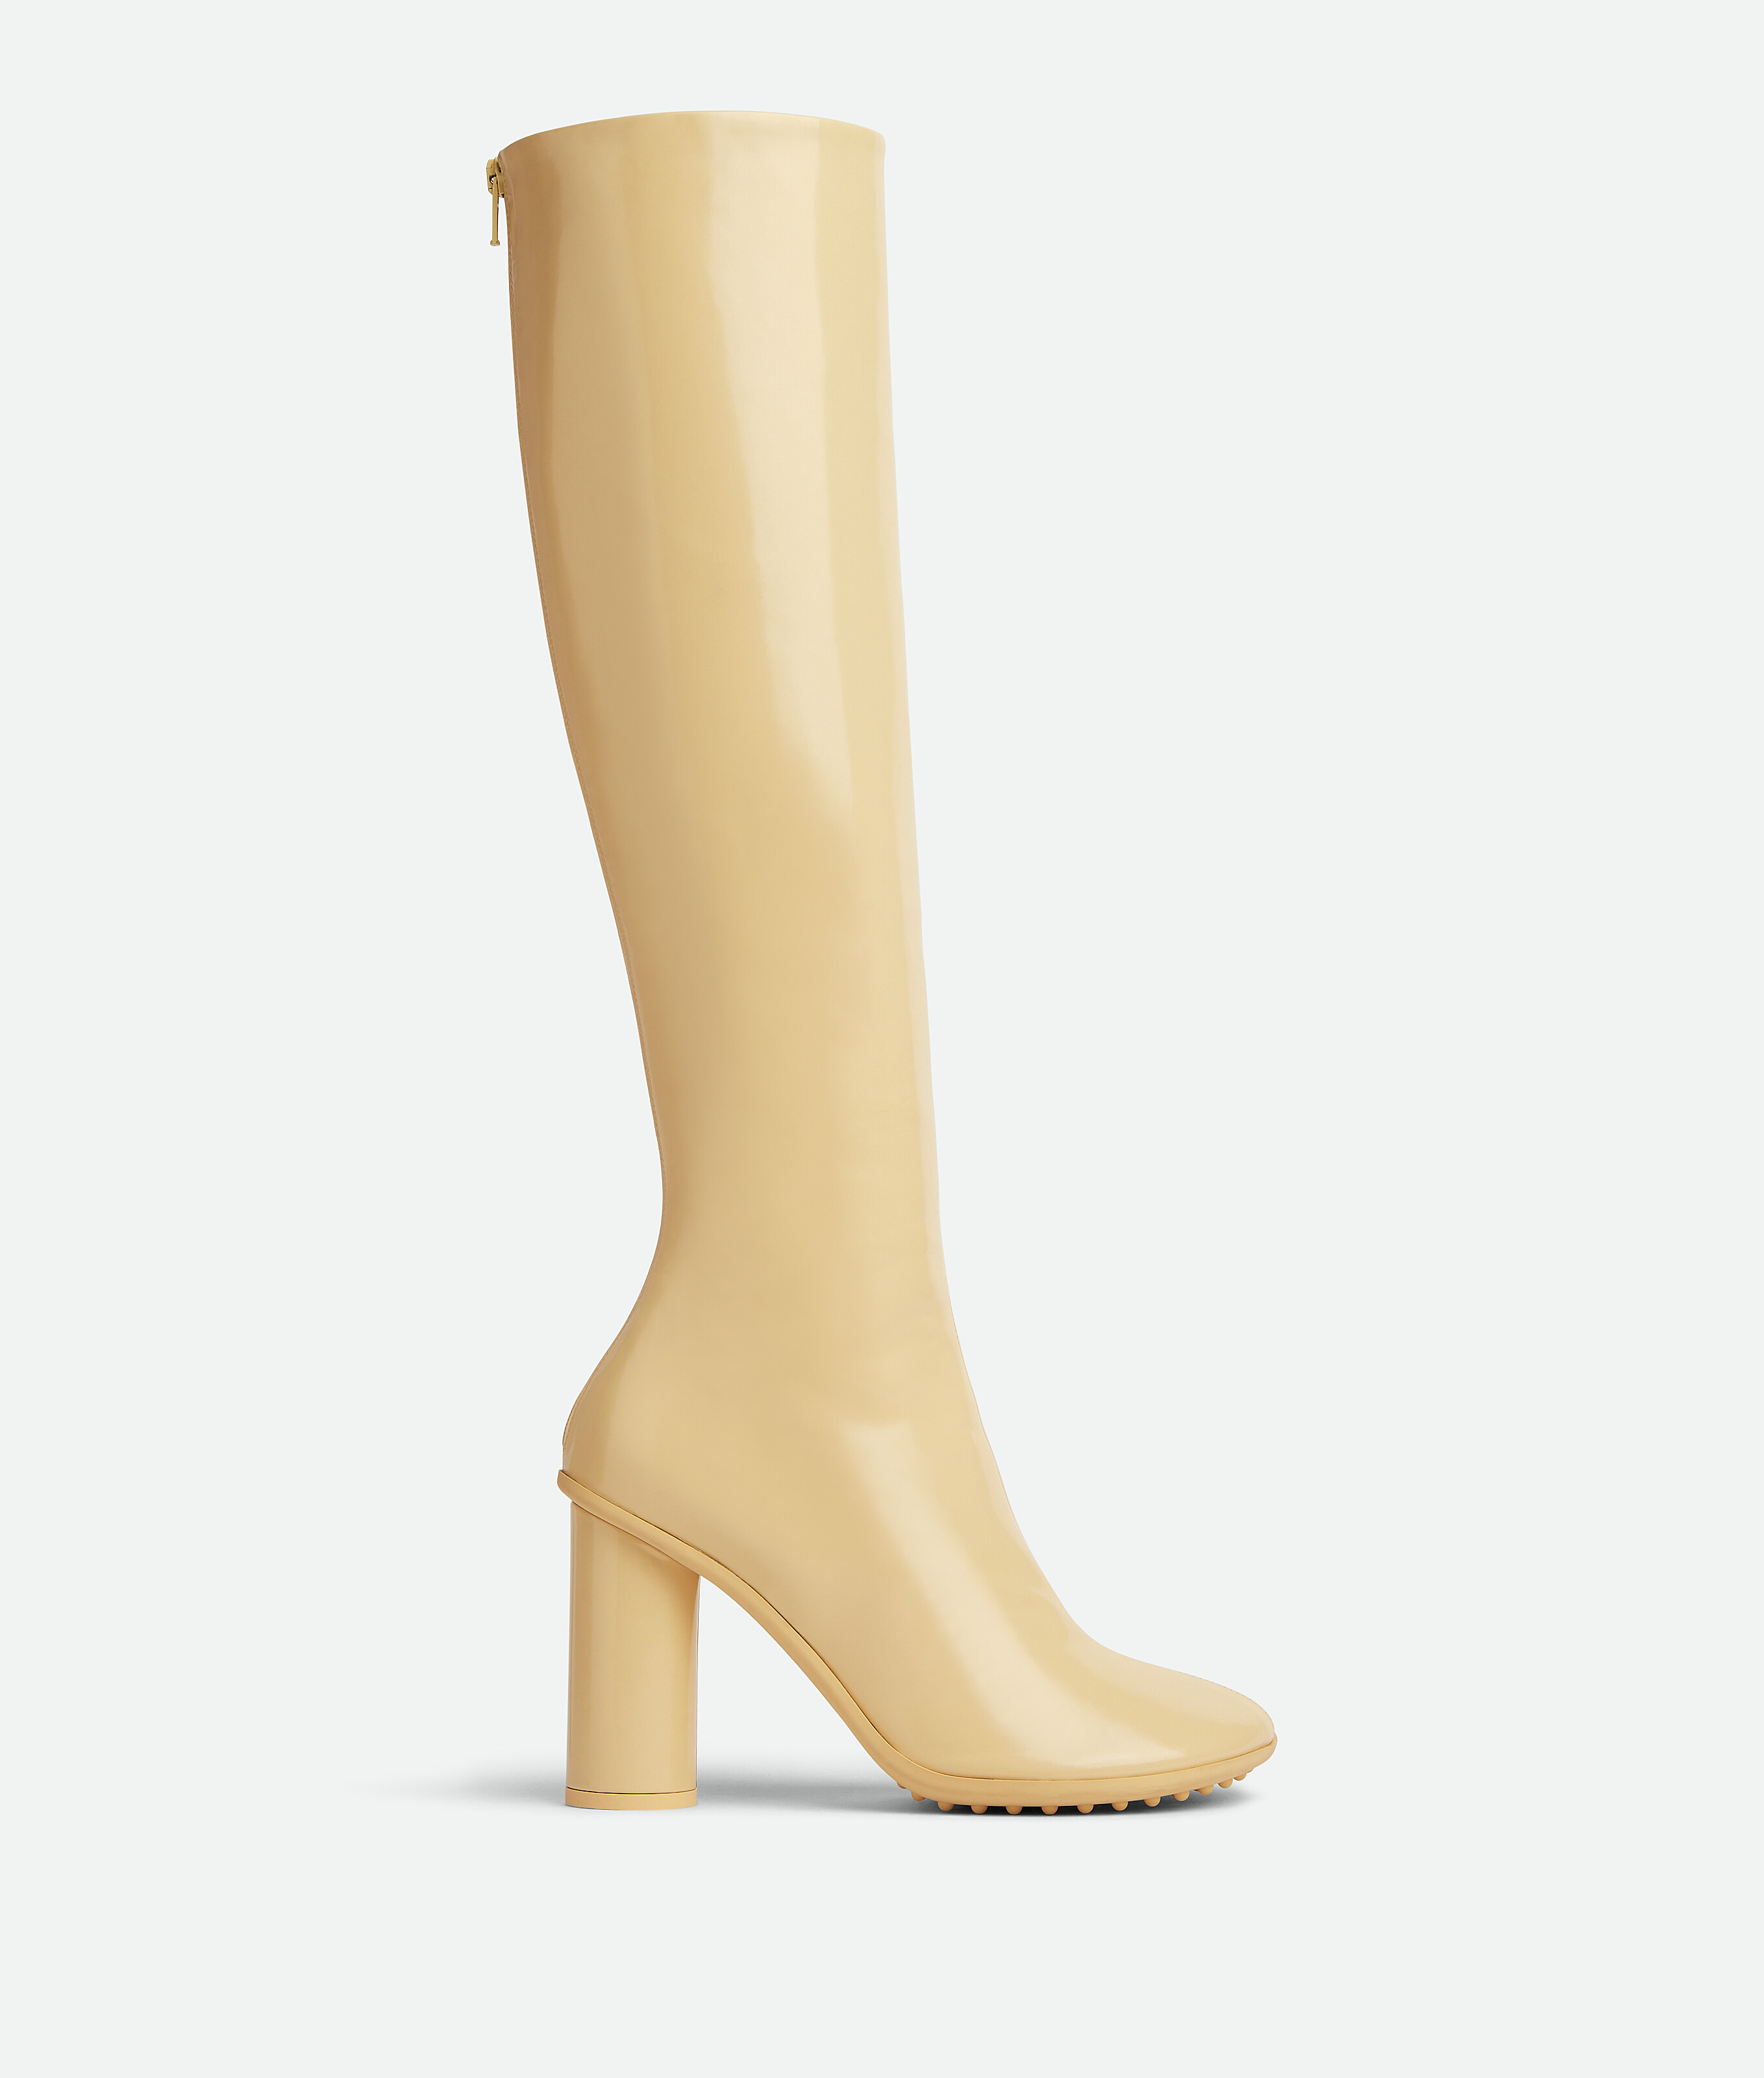 Bottega Veneta® Women's Atomic Boot in Rubber. Shop online now.